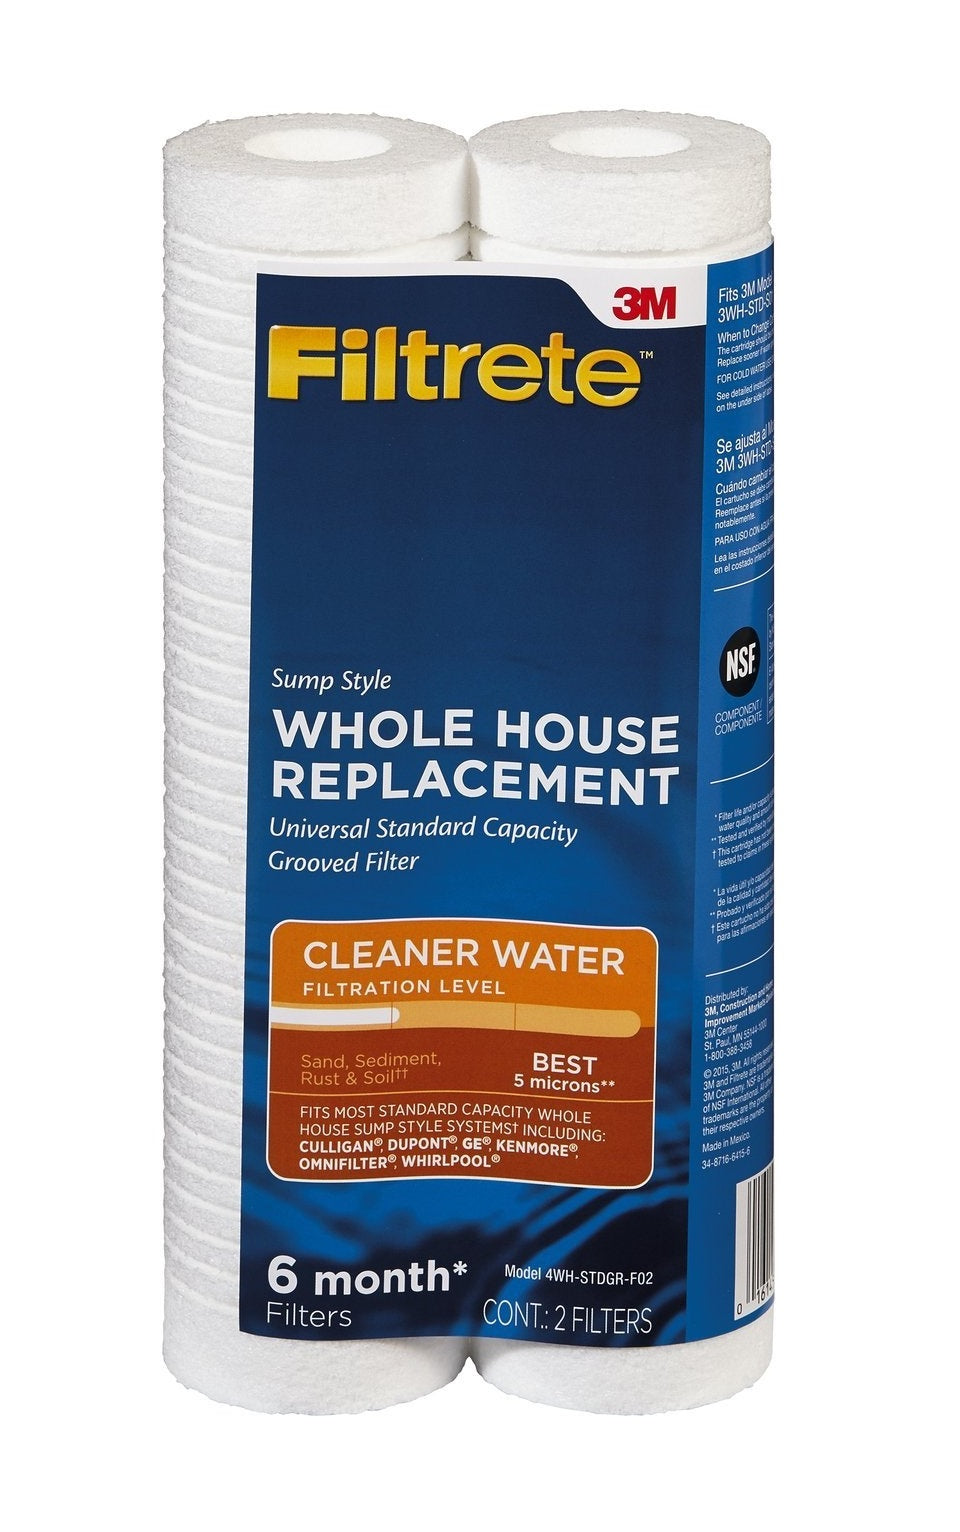 buy water filters at cheap rate in bulk. wholesale & retail plumbing repair tools store. home décor ideas, maintenance, repair replacement parts